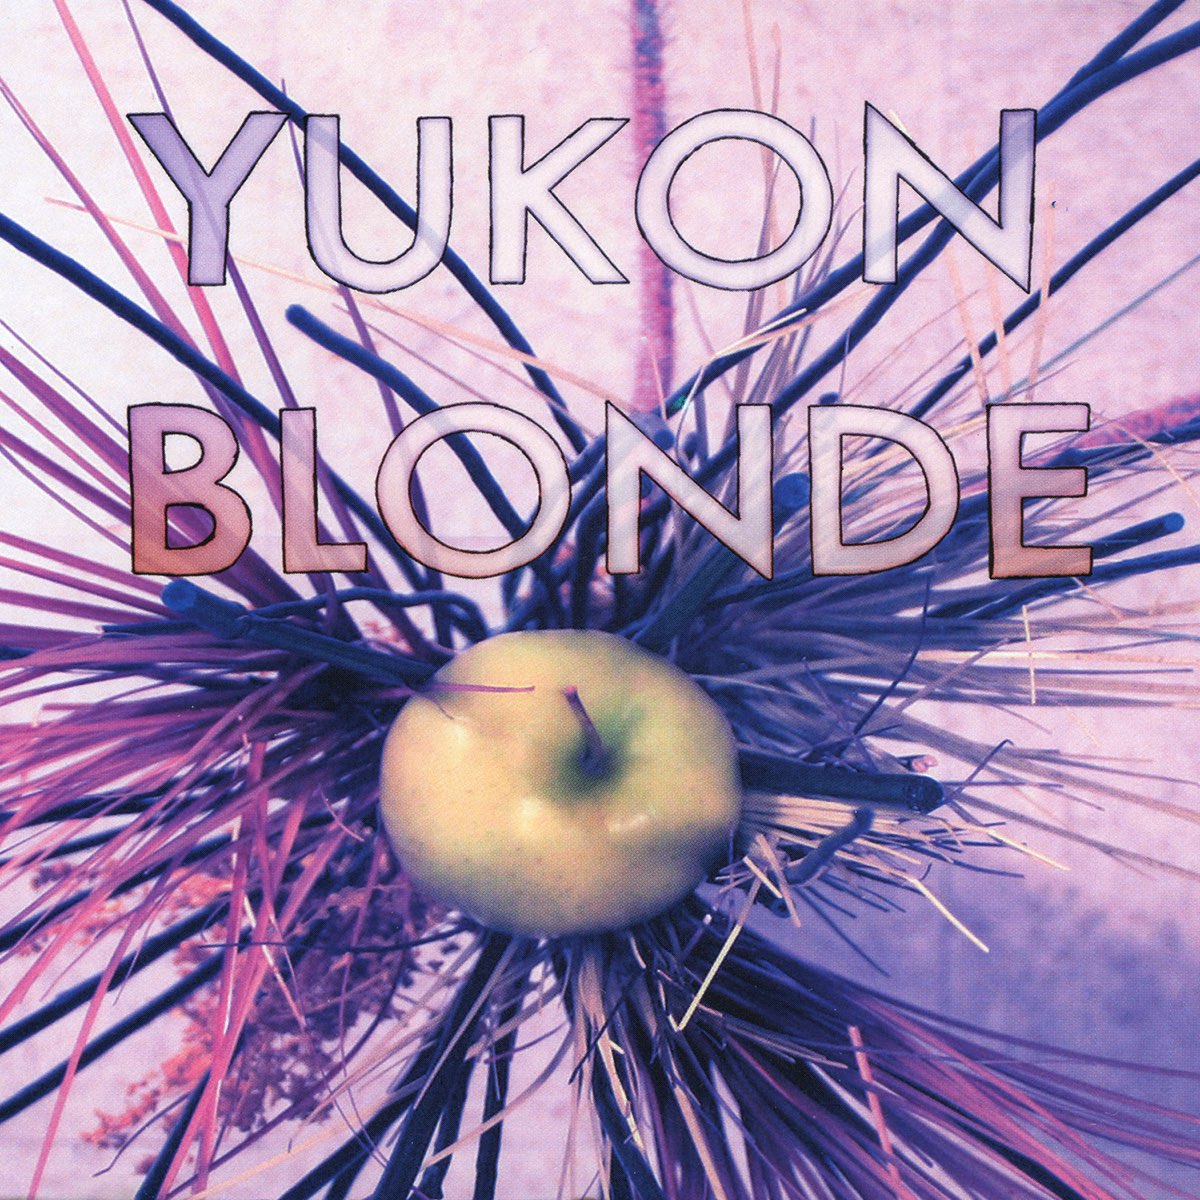 Blonde альбом. Альбом Yukon книга. Endless blonde albums.